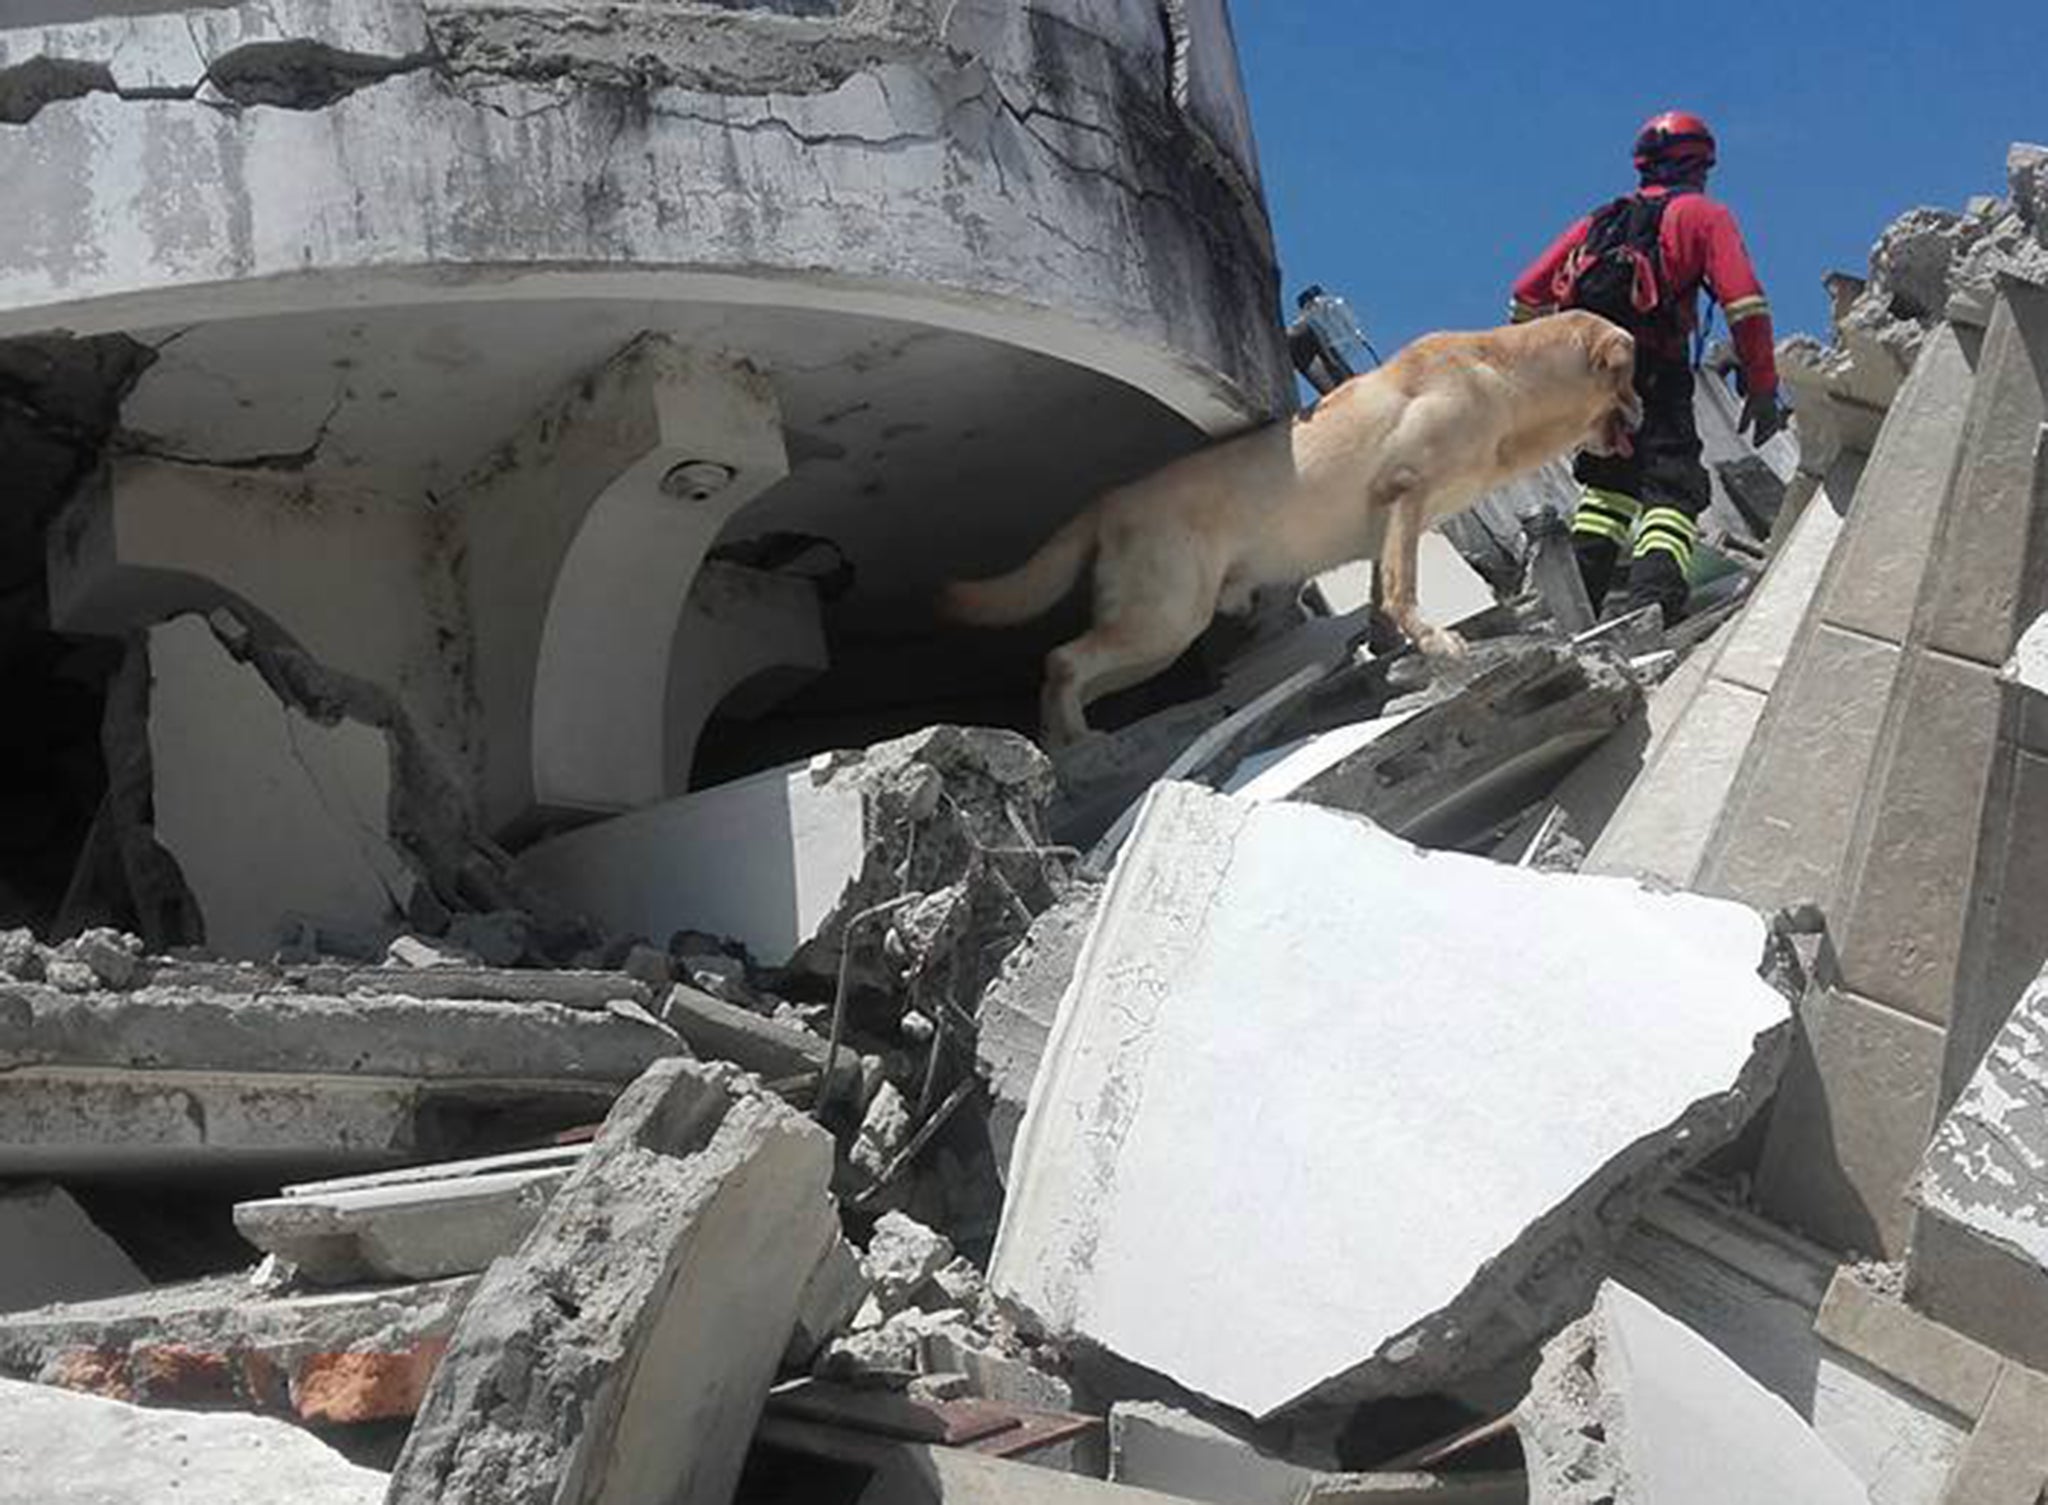 Rescue teams looking for survivors in Ecuador that killed 600 in April